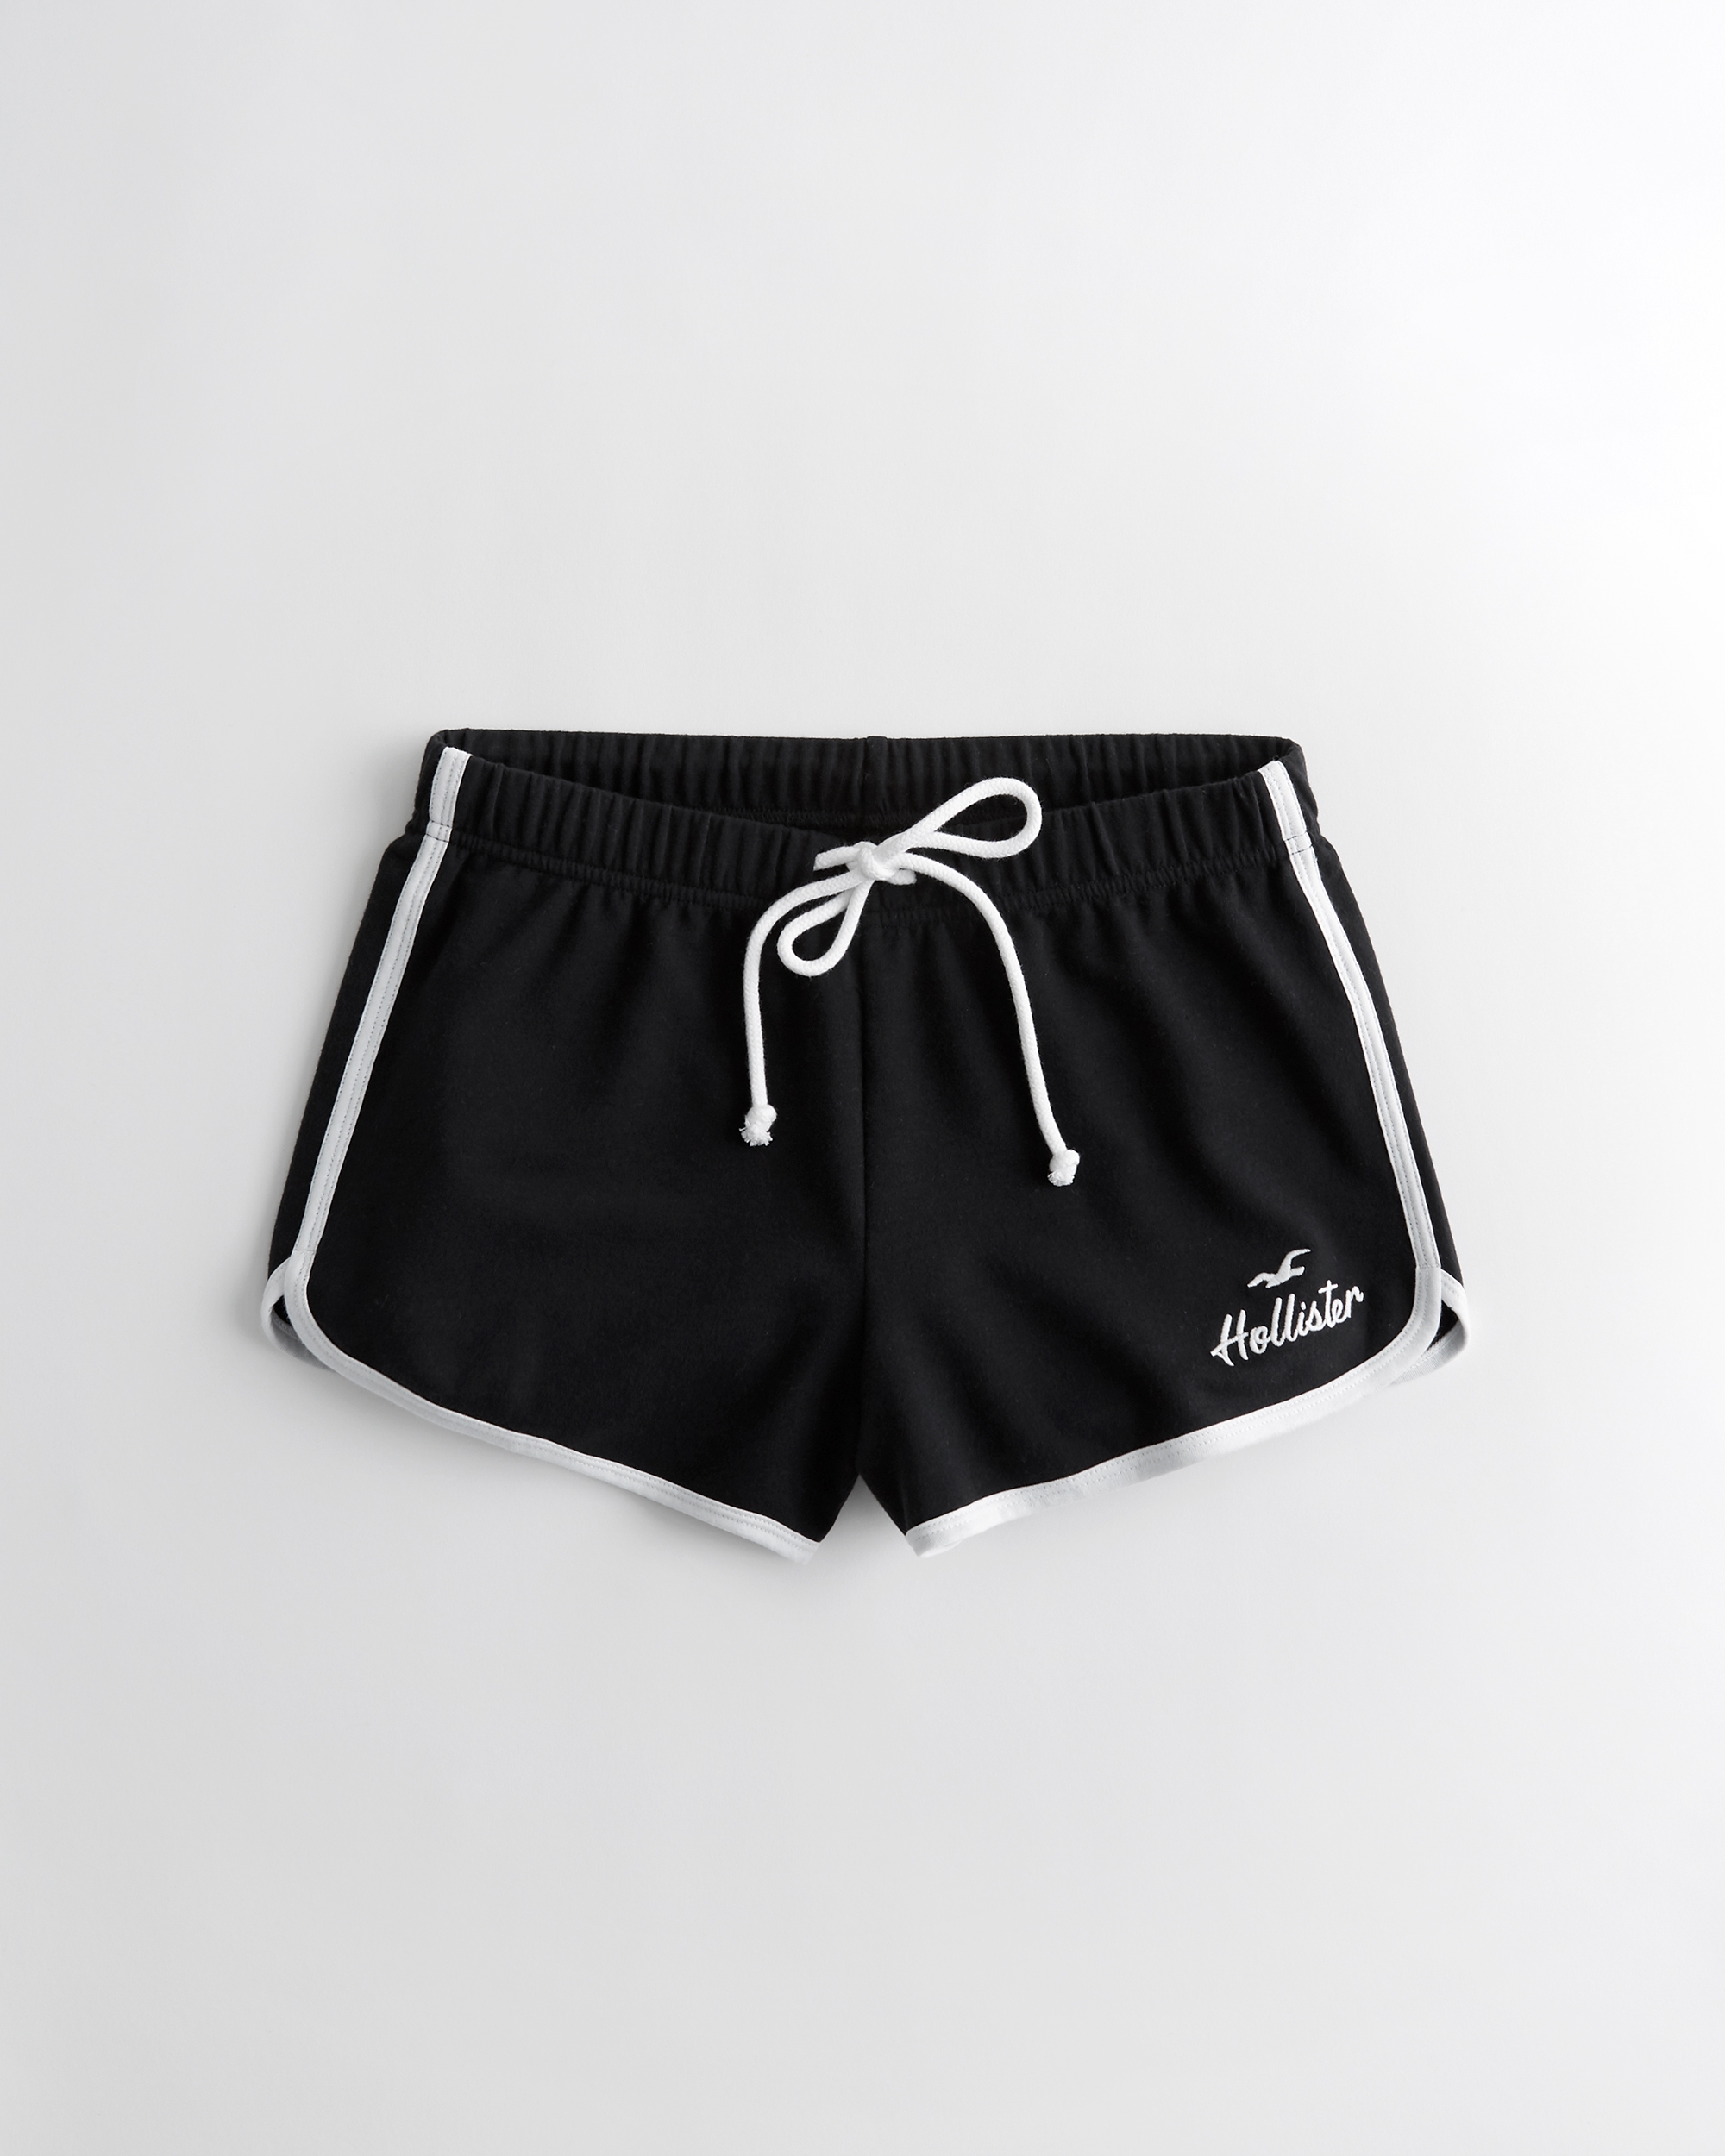 hollister shorts for girls